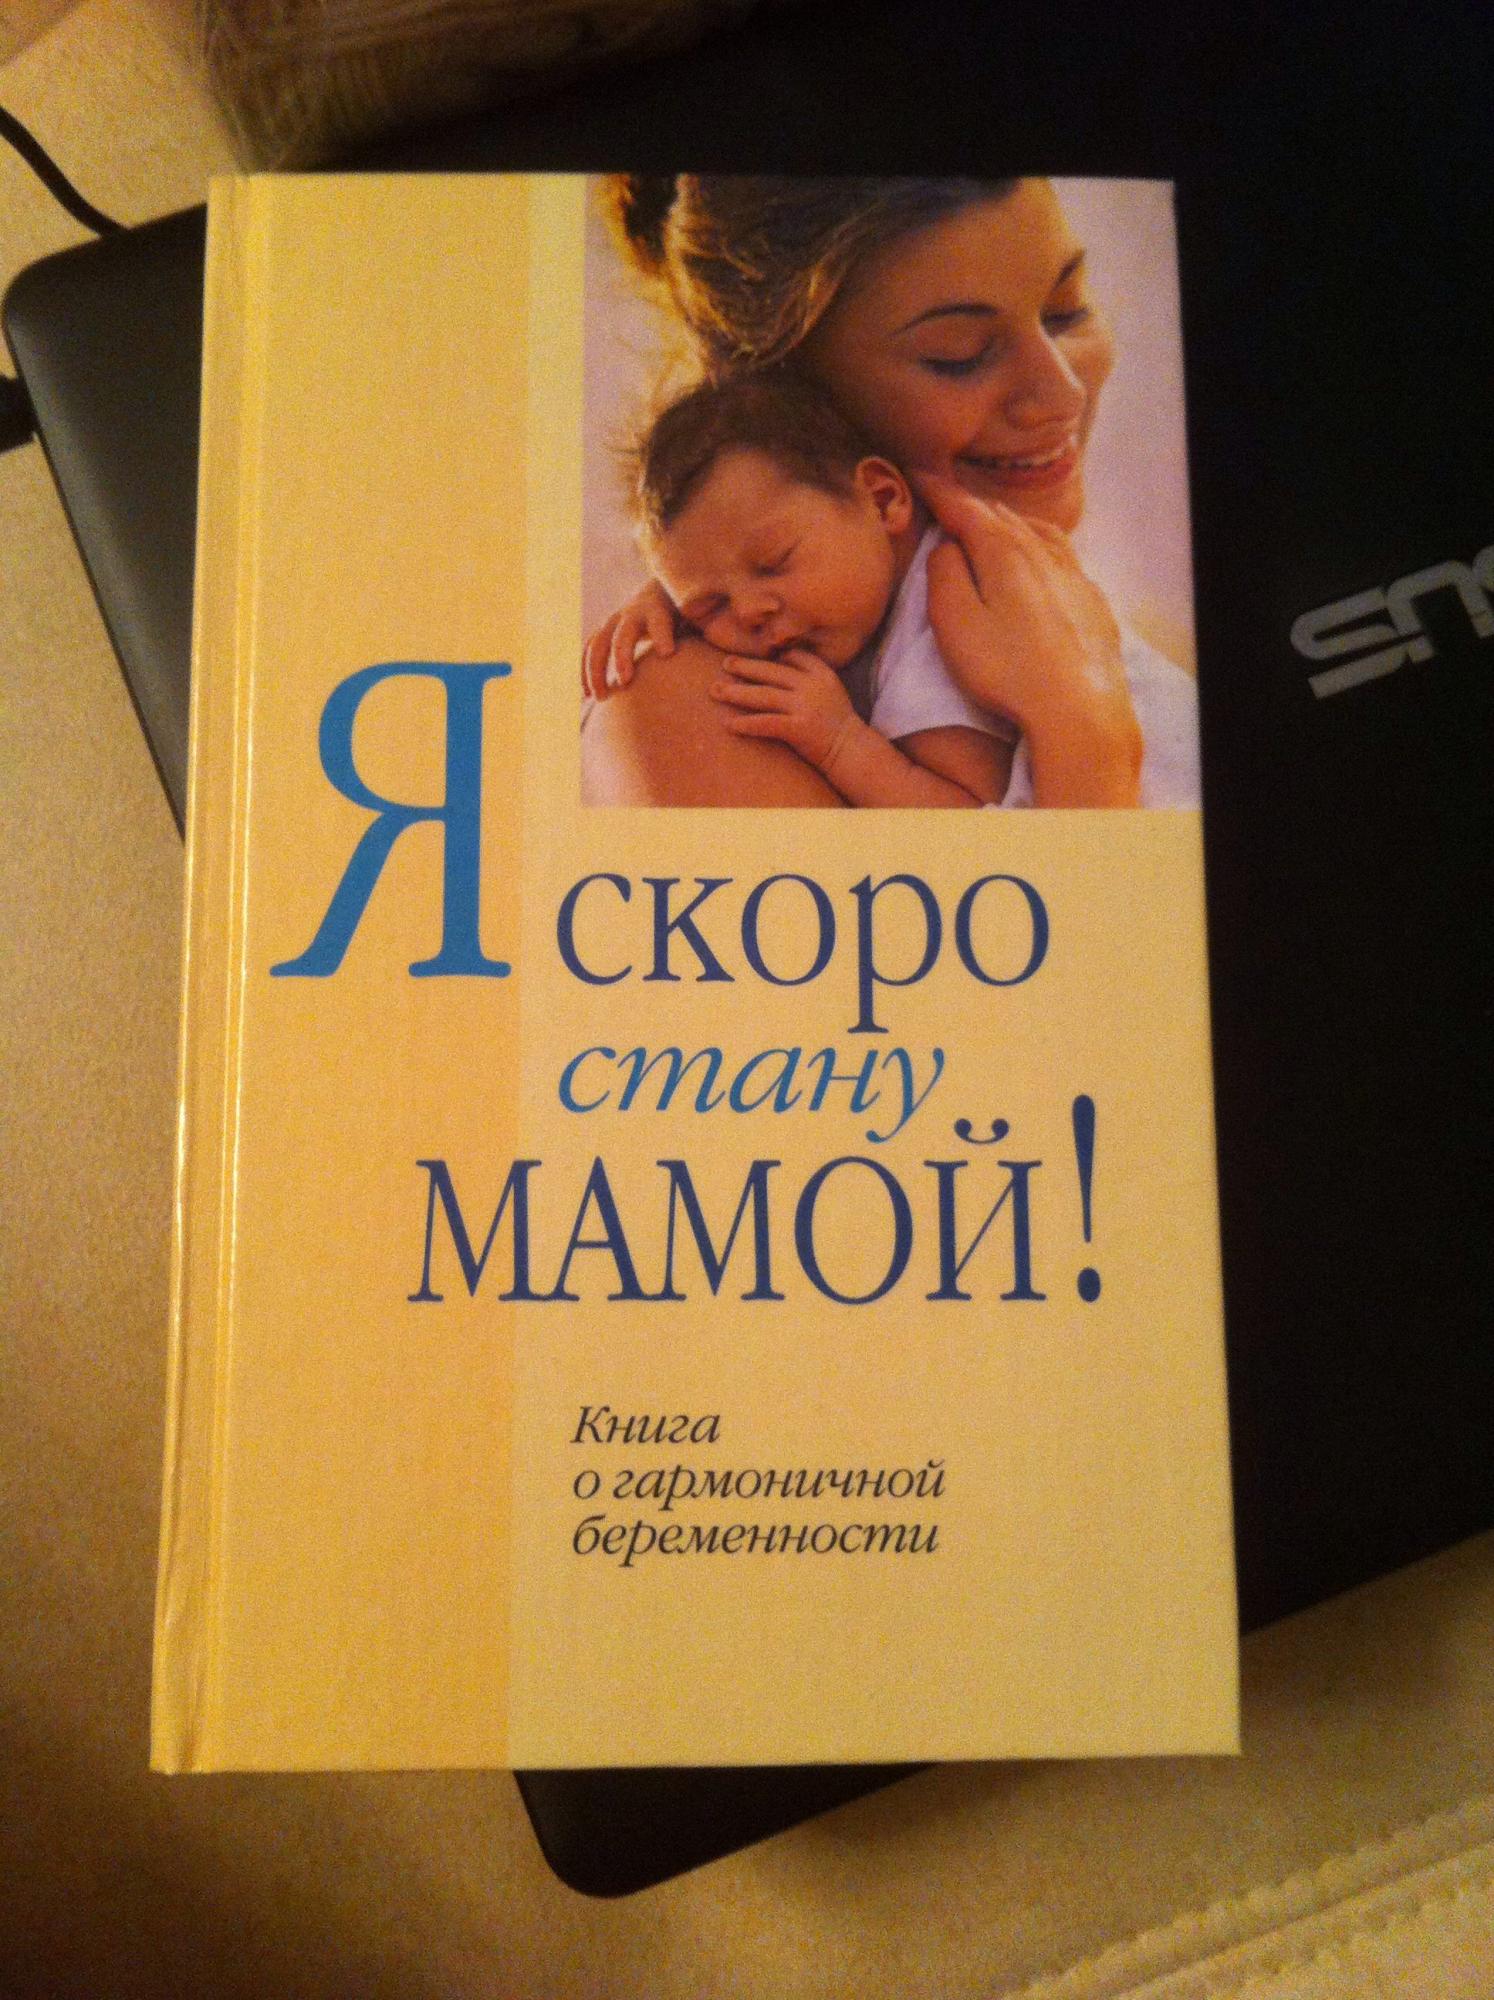 Скоро стану мамой. Книга скоро стану мамой. Я - скоро мама. Я скоро стану мамой